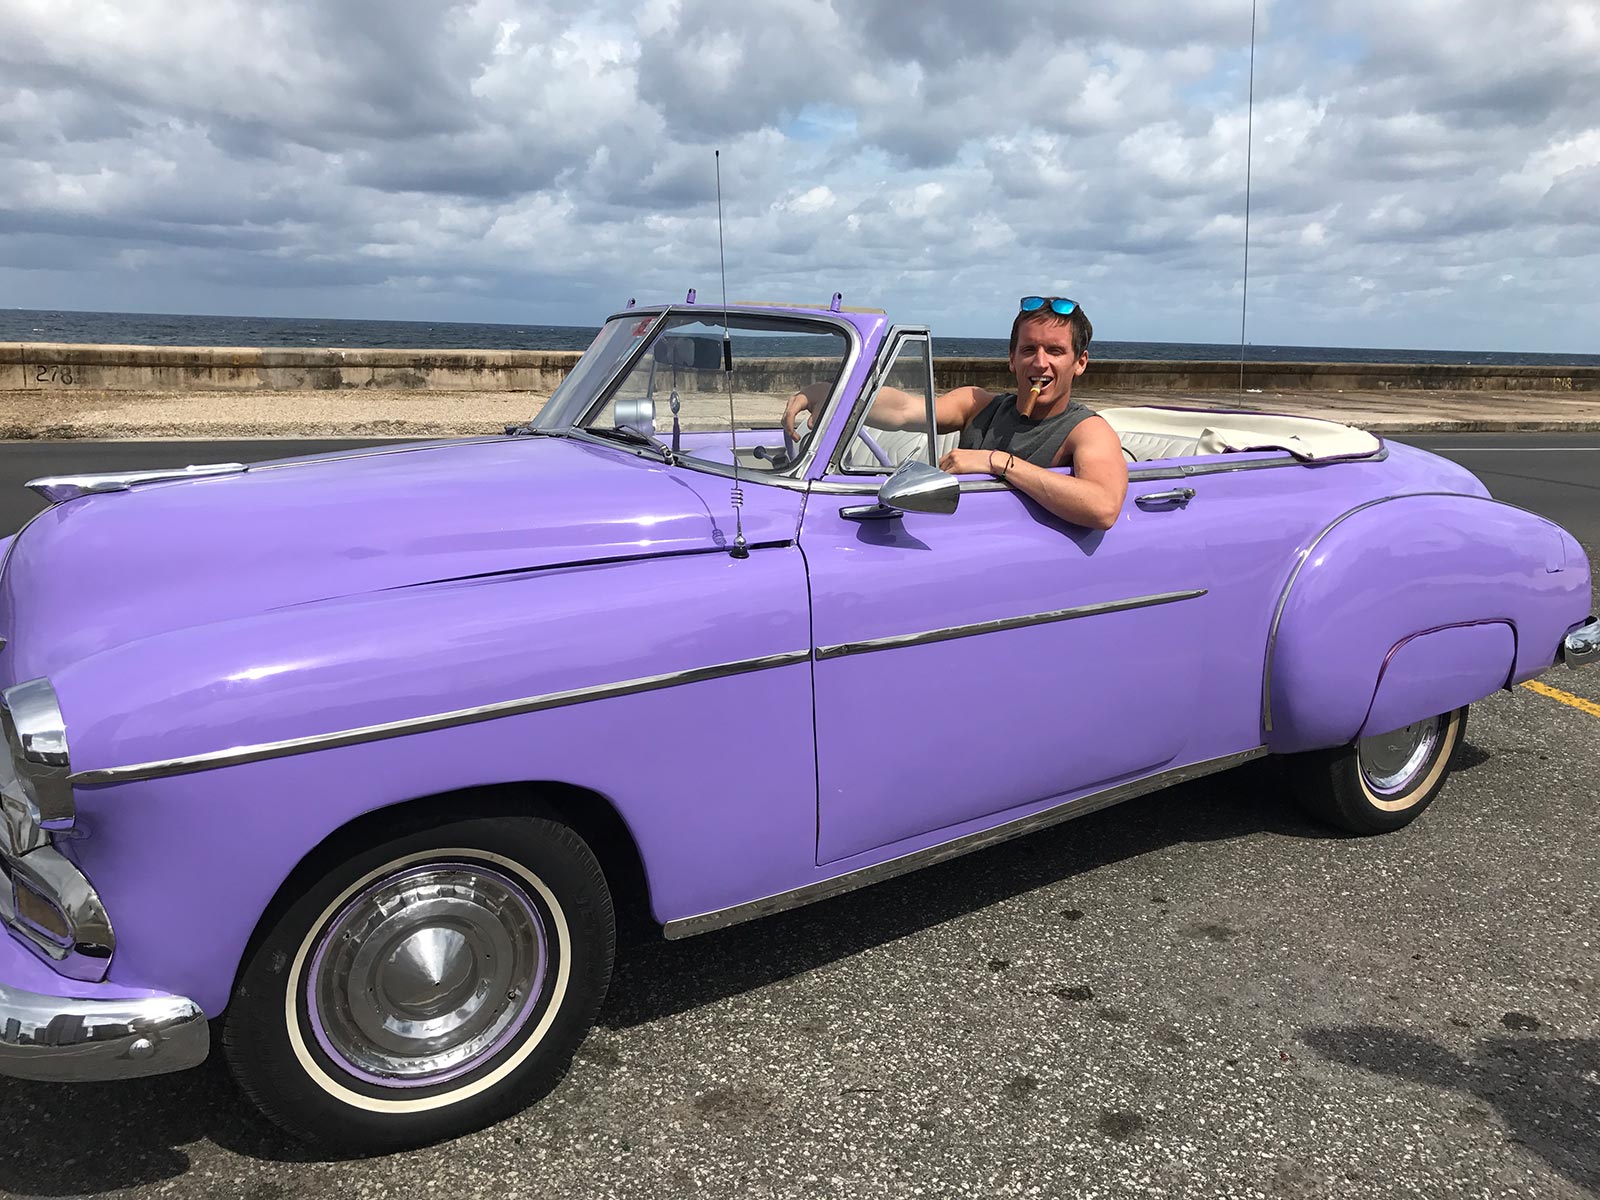 David Simpson riding vintage car in Havana, Cuba. Cigars, cars & cocktails in Cuba